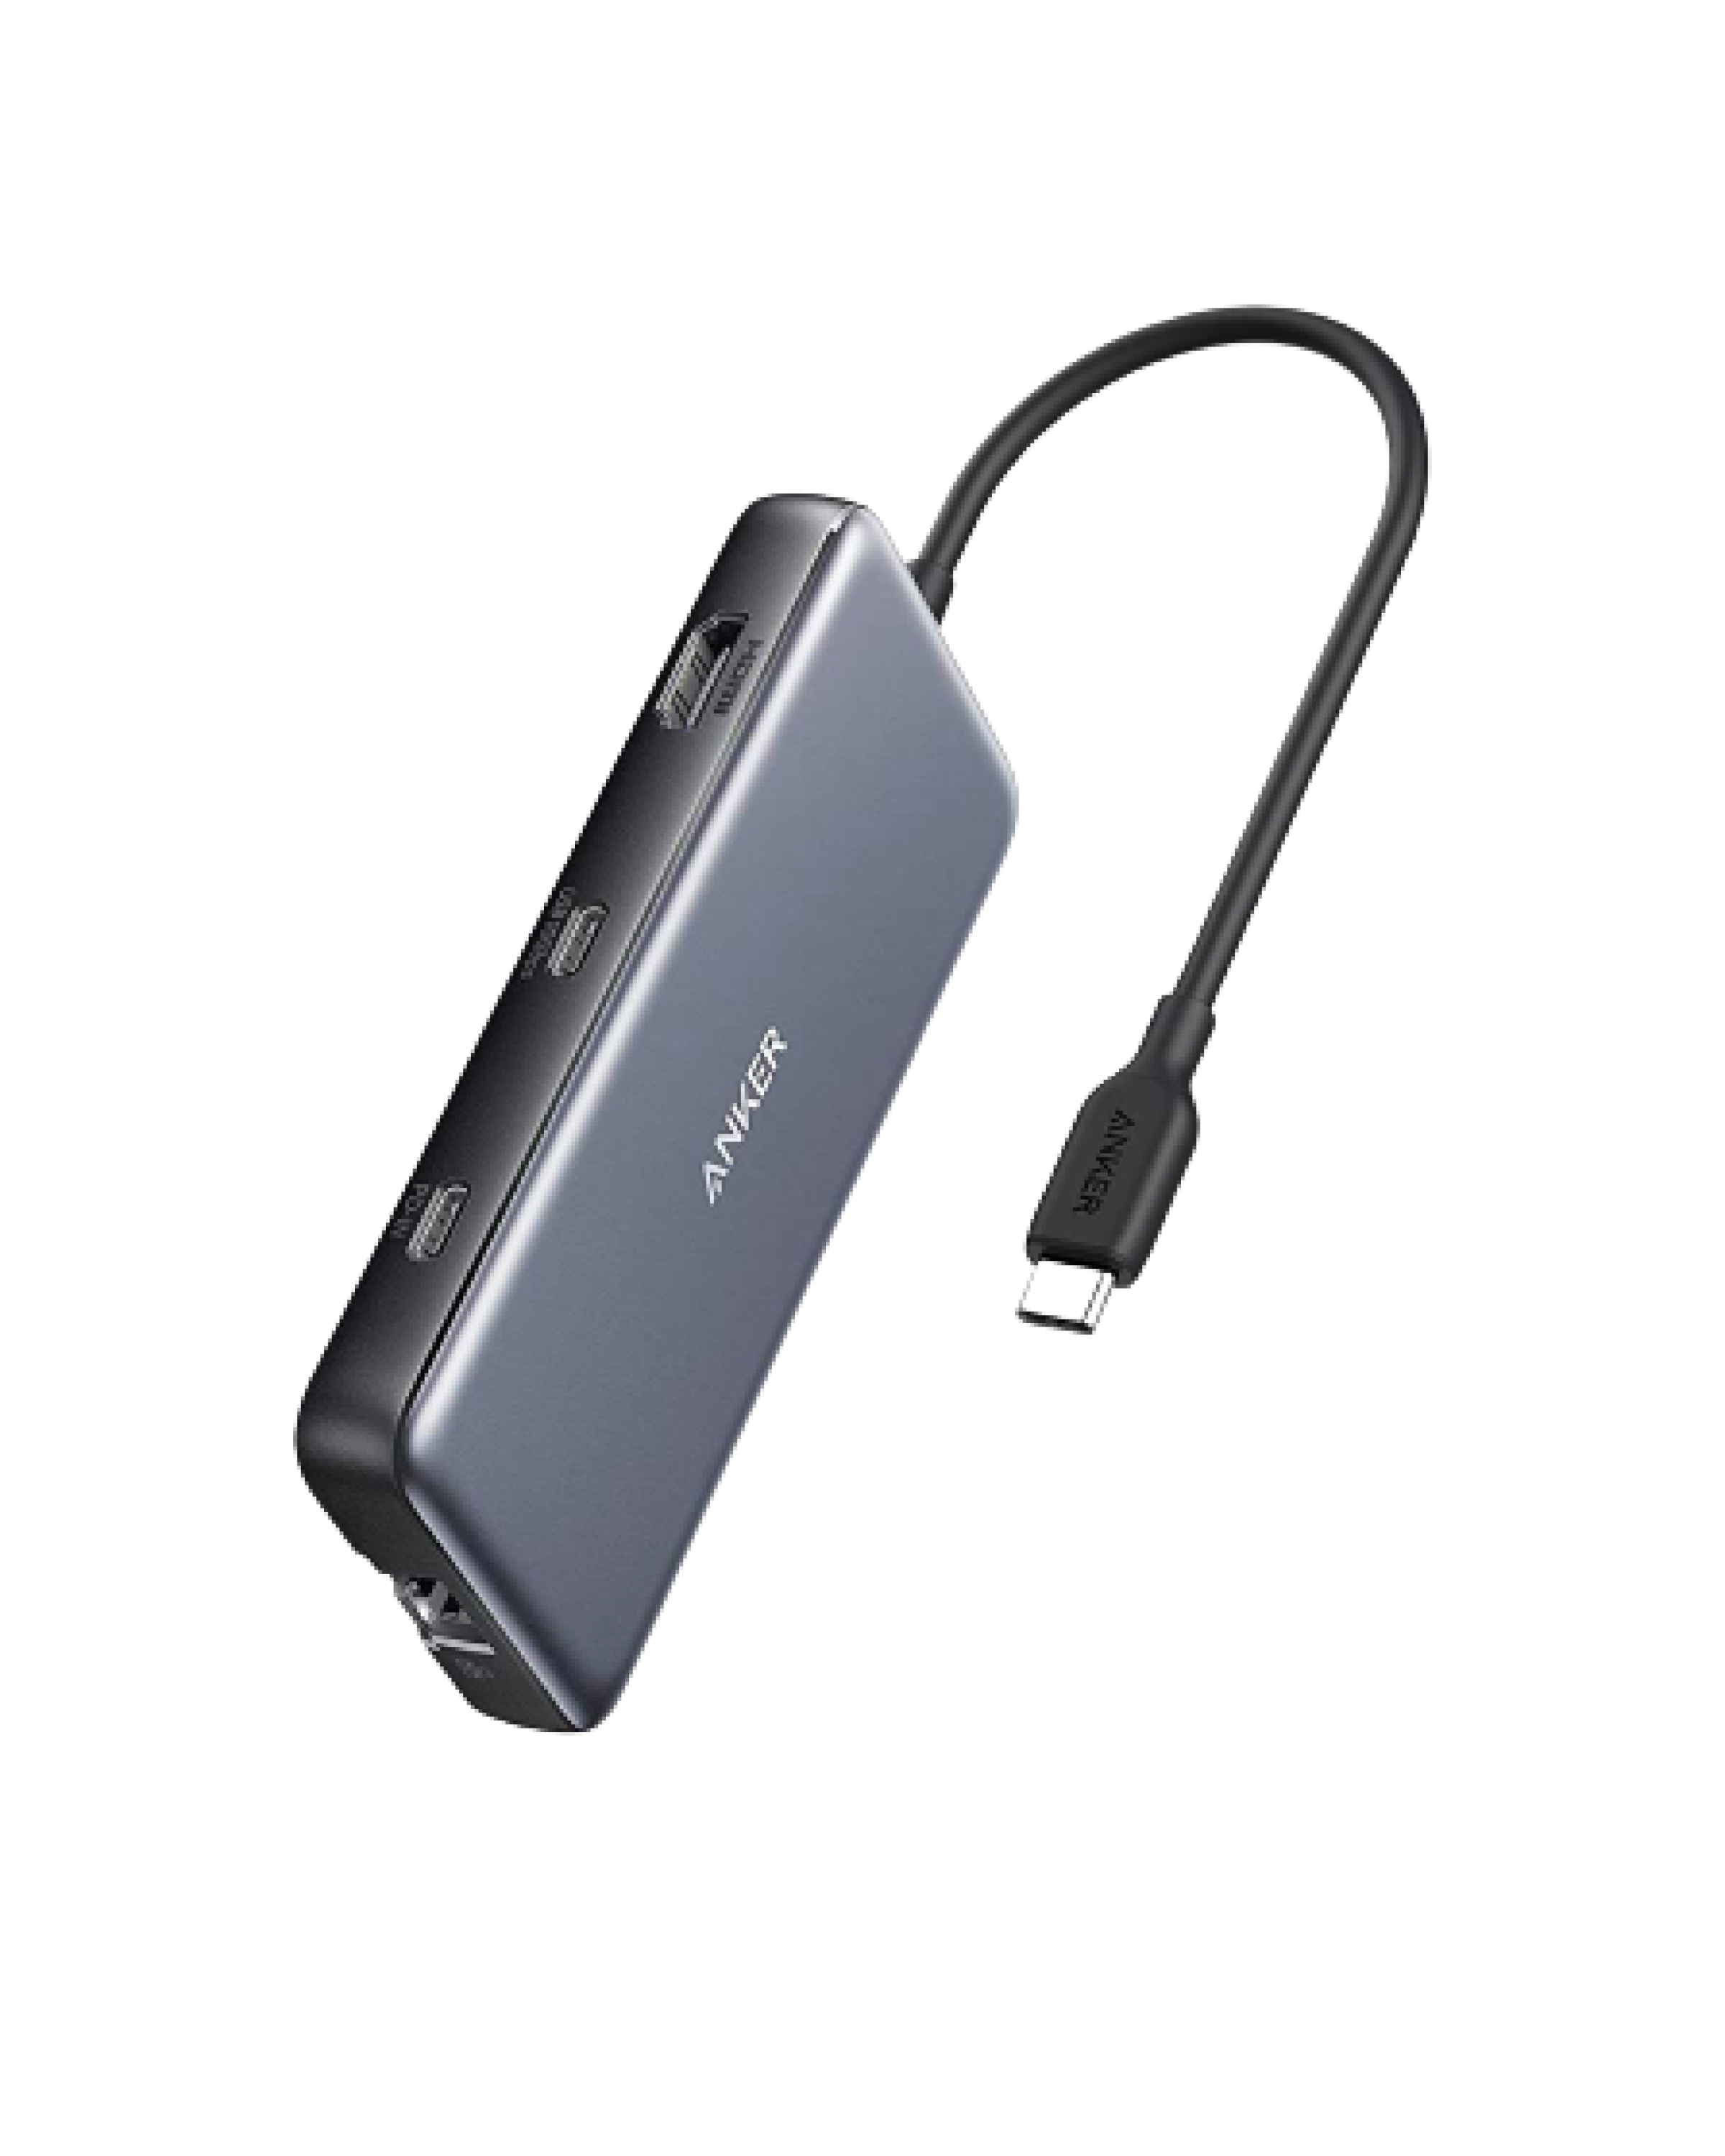 2-Port USB-C KVM Switch, Single-4K 60Hz HDMI Monitor, Dual-100W Power  Delivery Pass-through Ports, Bus Powered, USB Type-C/USB4/Thunderbolt 3/4